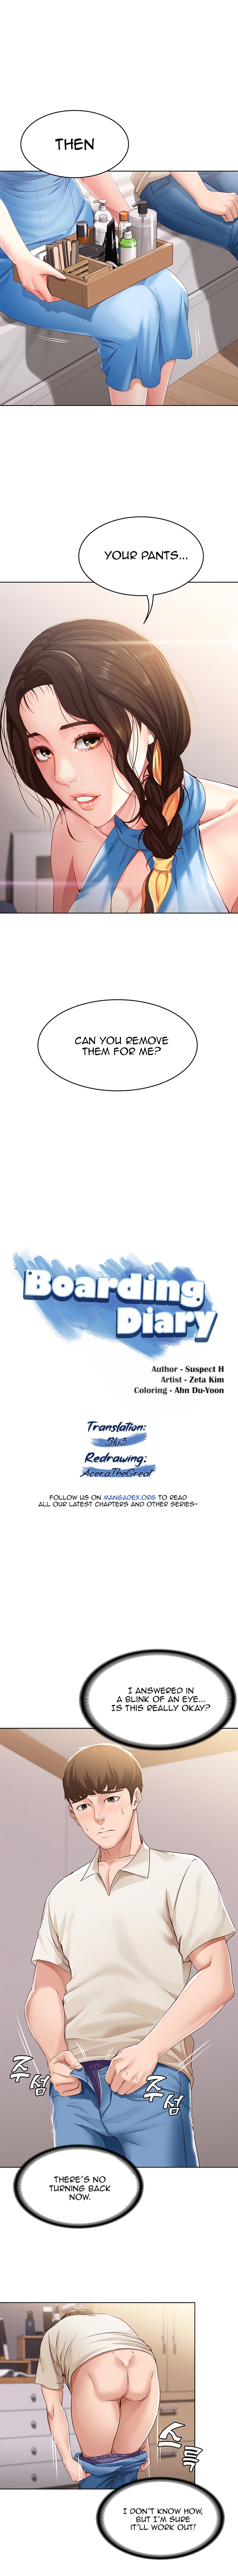 Boarding Diary image